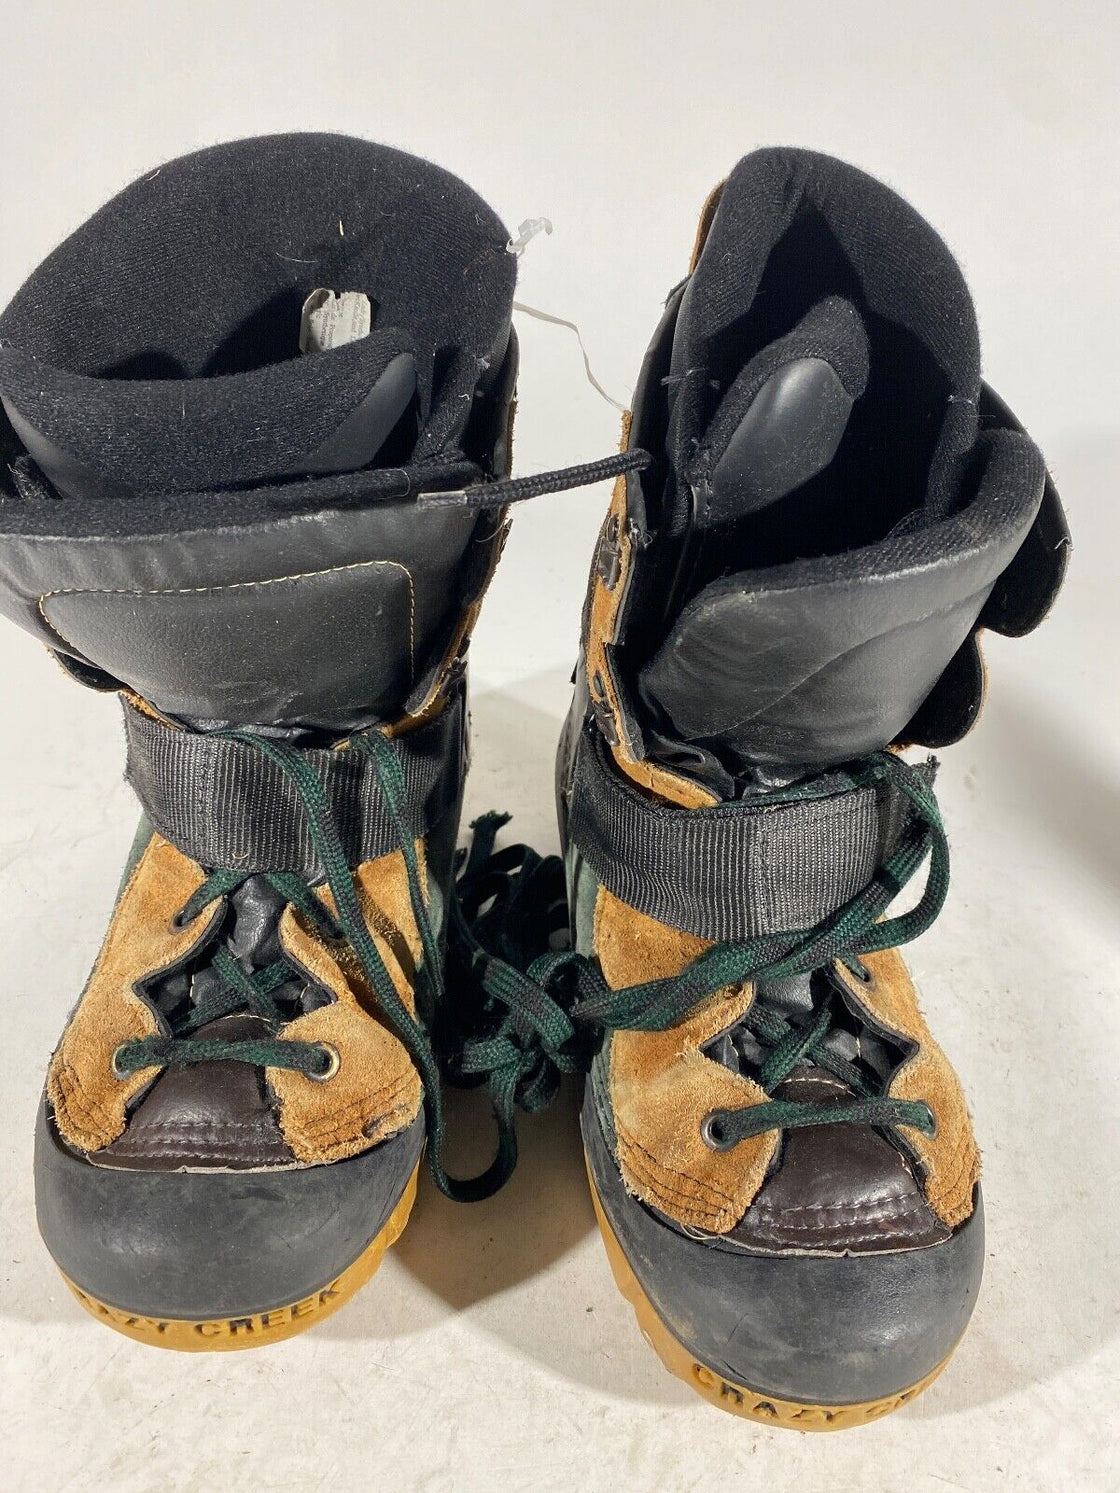 Crazy Creek Snowboard Vintage Boots Size EU43, US9.5, UK8, Mondo 275 mm